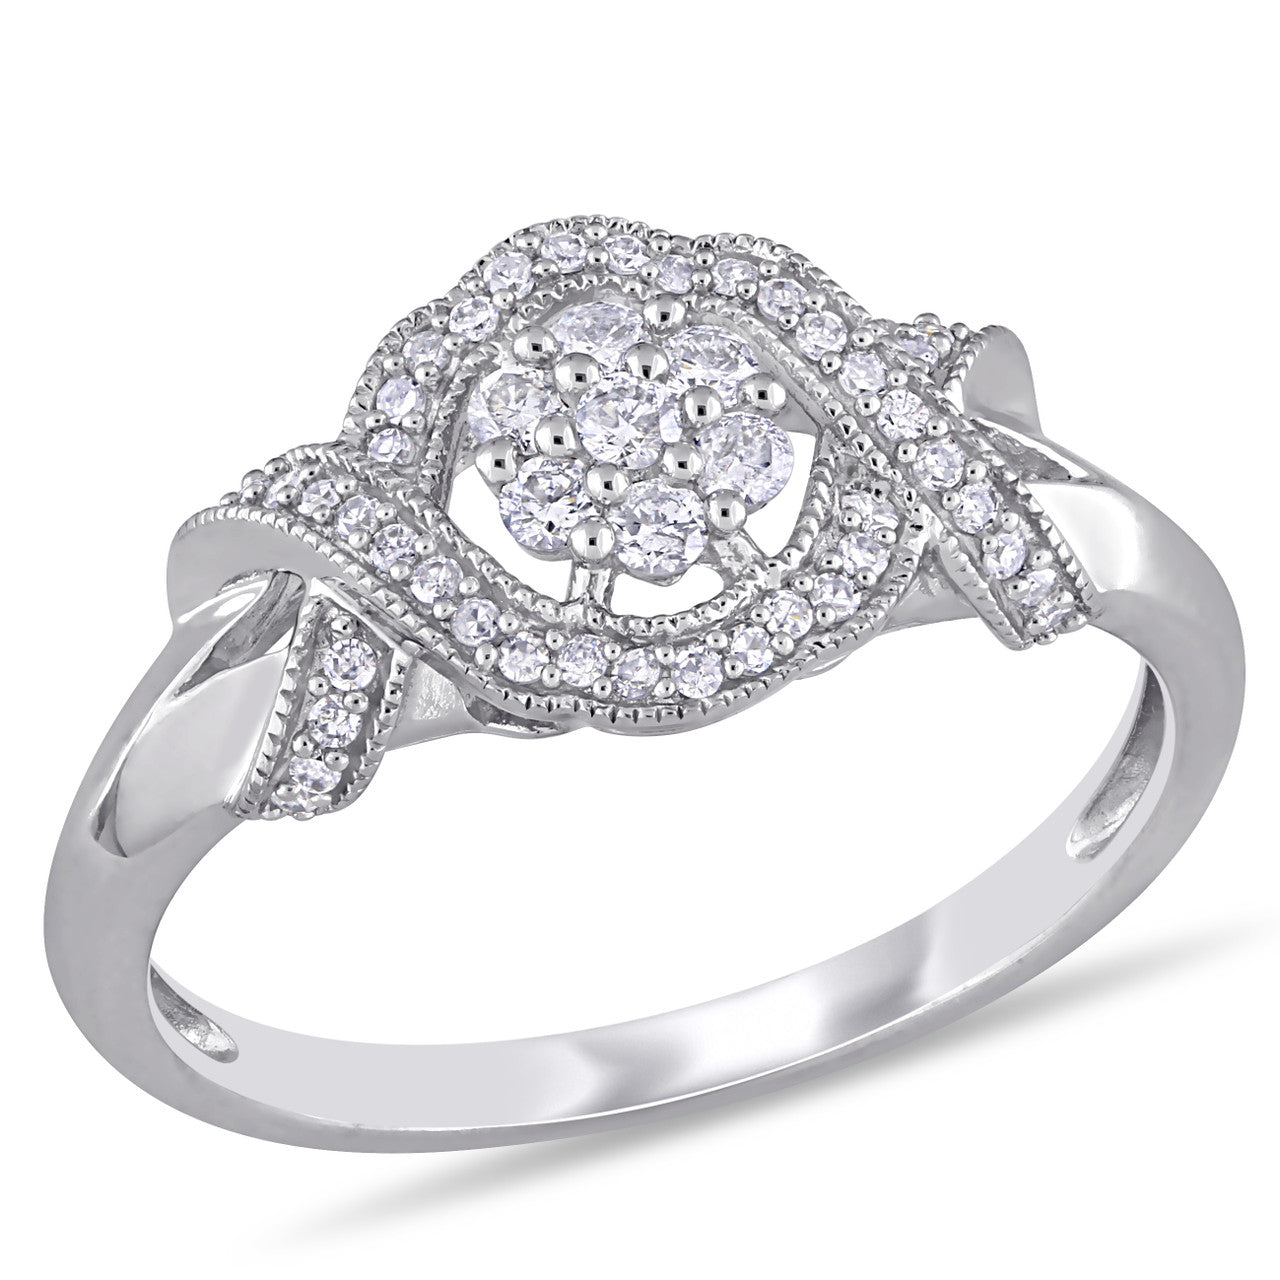 Ice Jewellery 1/3 CT Diamond TW Fashion Ring 10k White Gold GH I2;I3 - 75000004572 | Ice Jewellery Australia